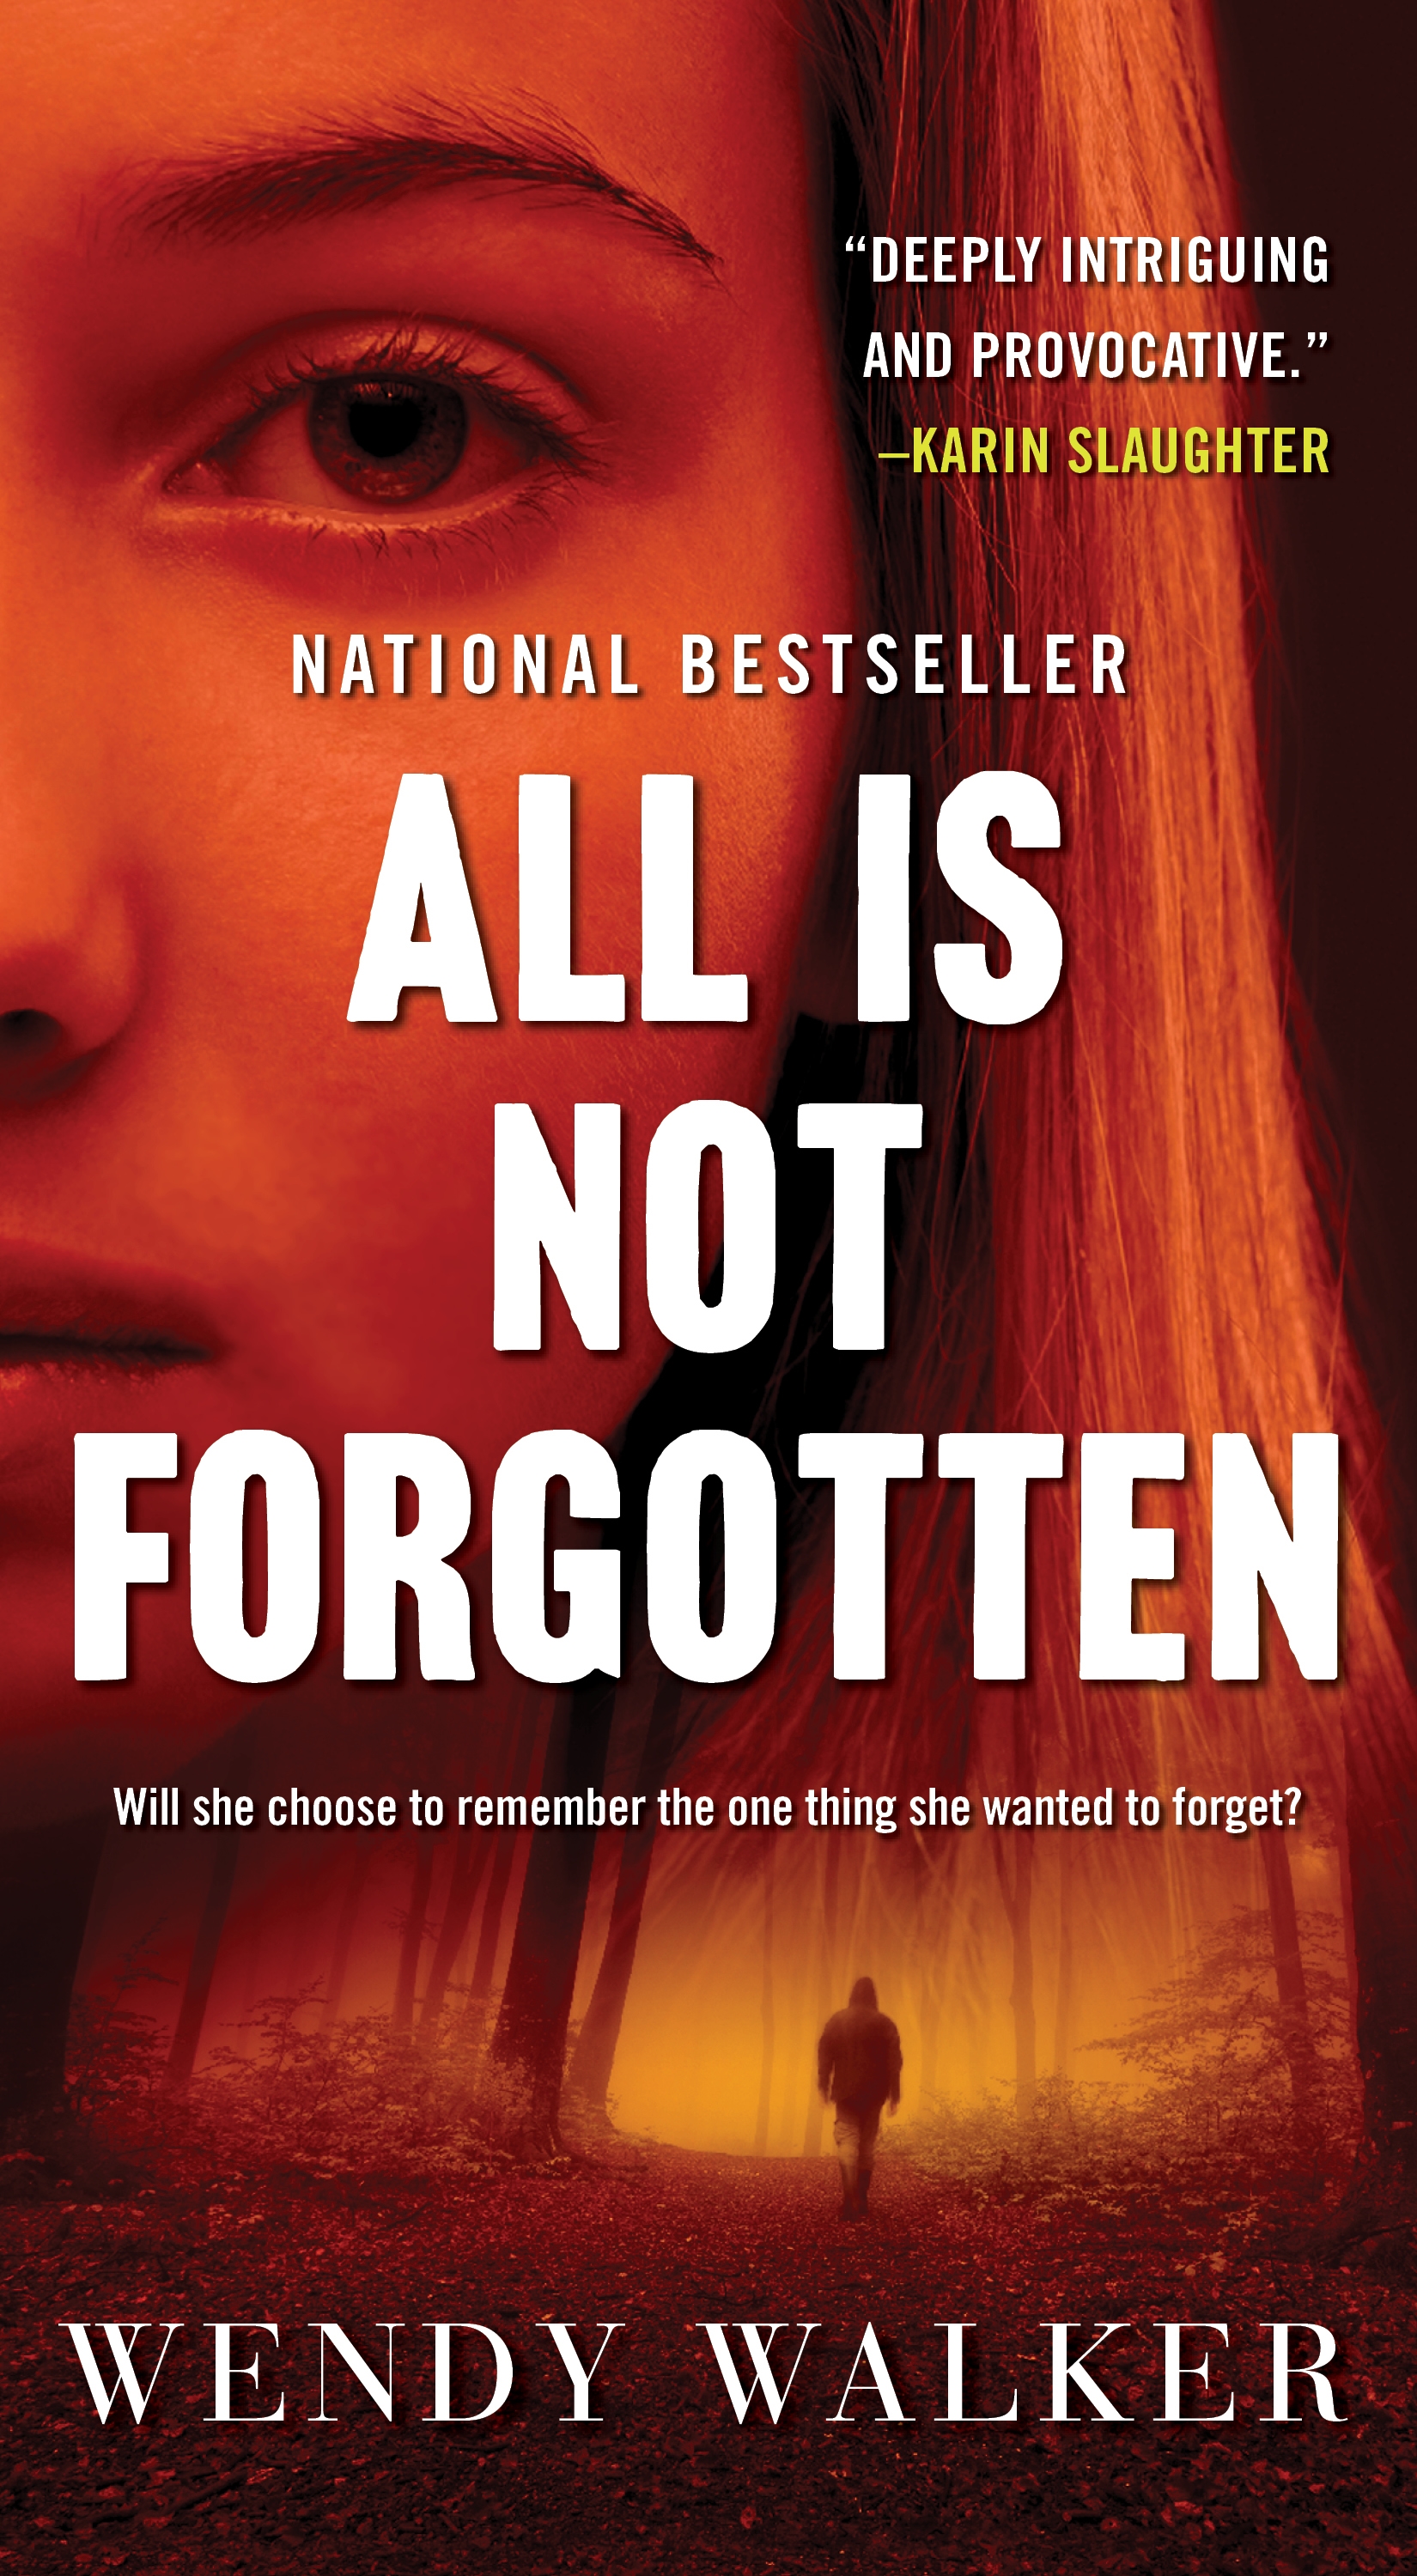 Book “All Is Not Forgotten” by Wendy Walker